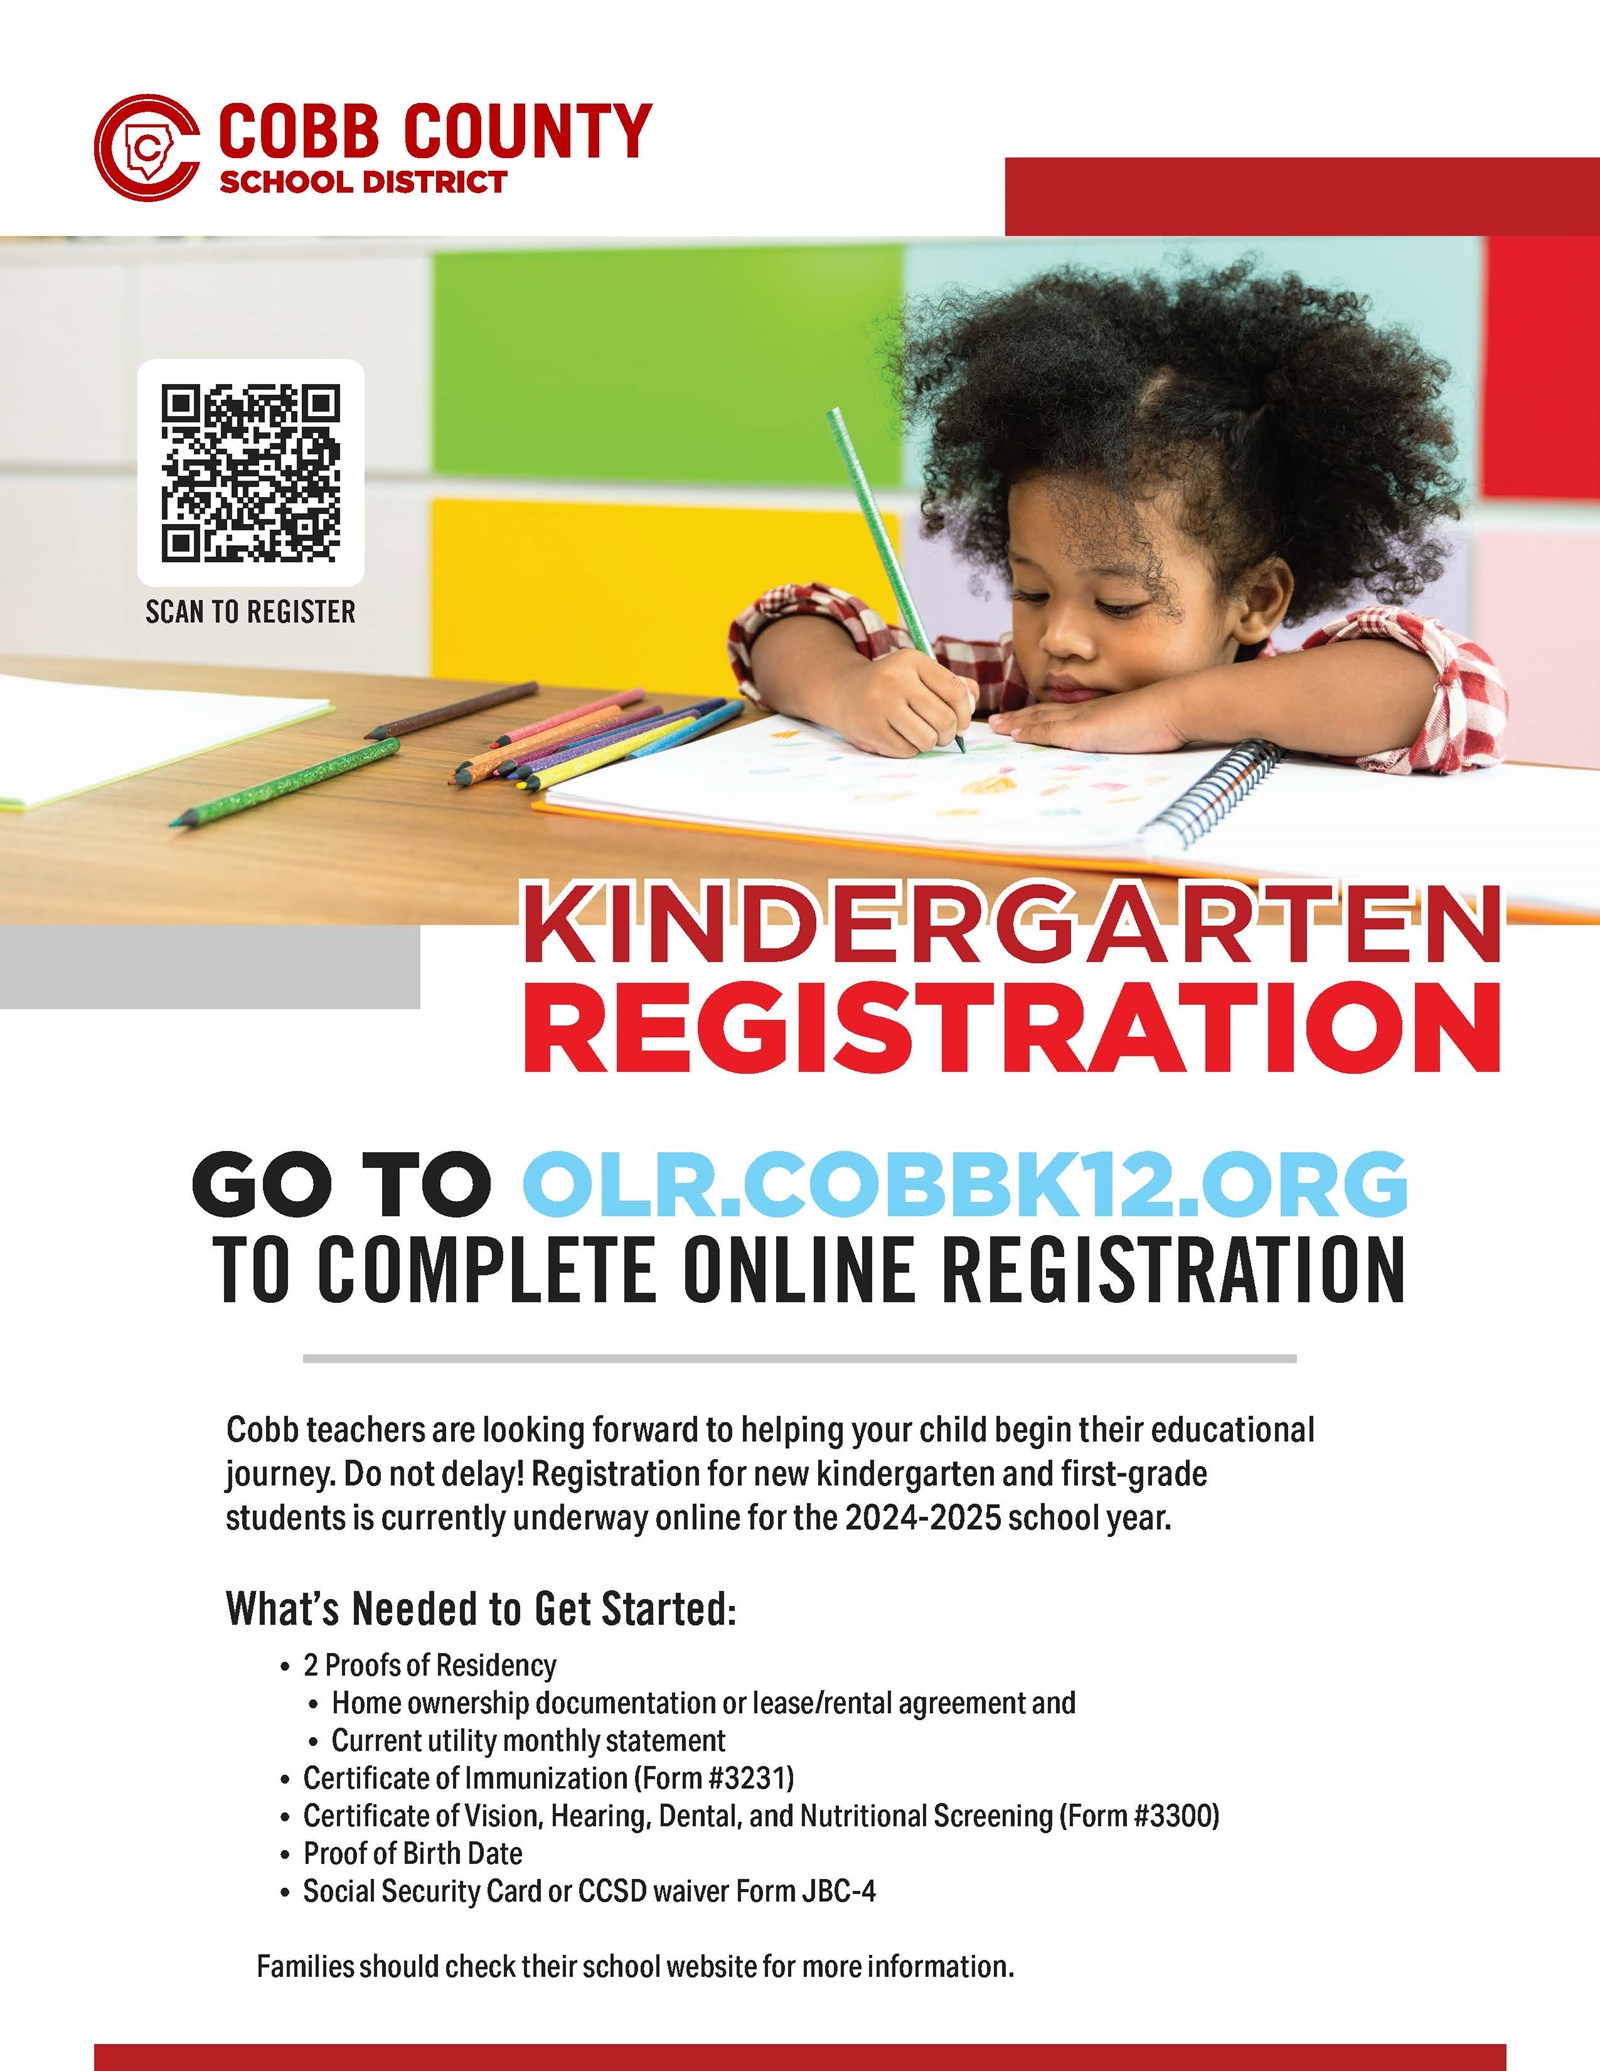 2023-Kindergarten-Registration-Flyer-3-1.jpg